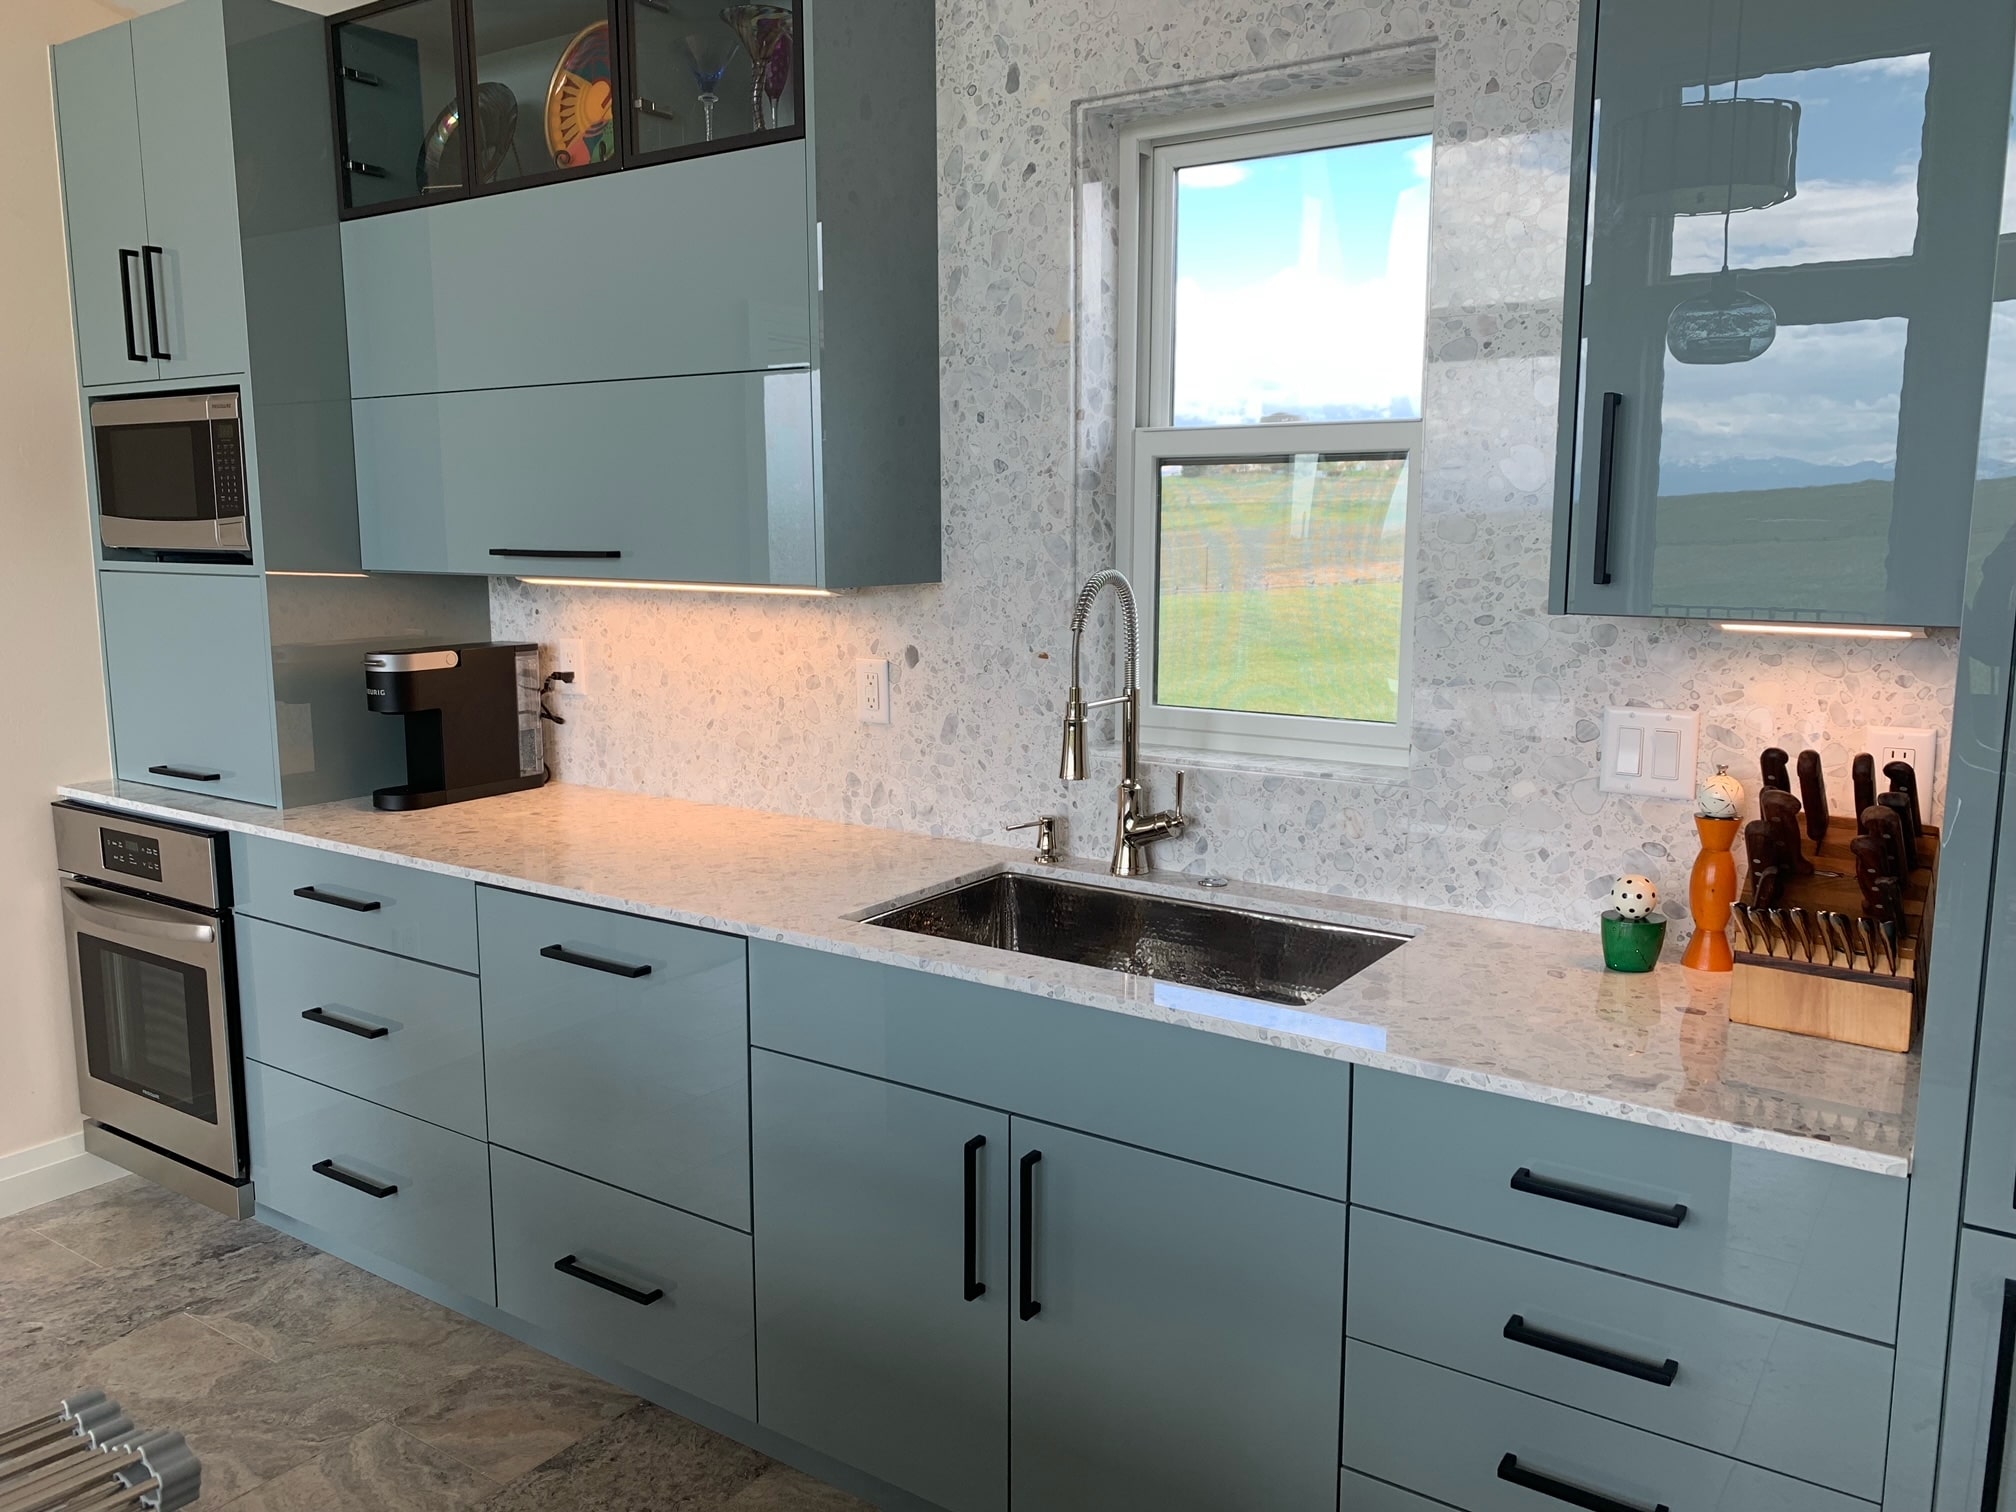 Modern kitchen design idea featuring a farmhouse sink, rustic-inspired decor, gray kitchen cabinets, marble countertops, marble backsplash